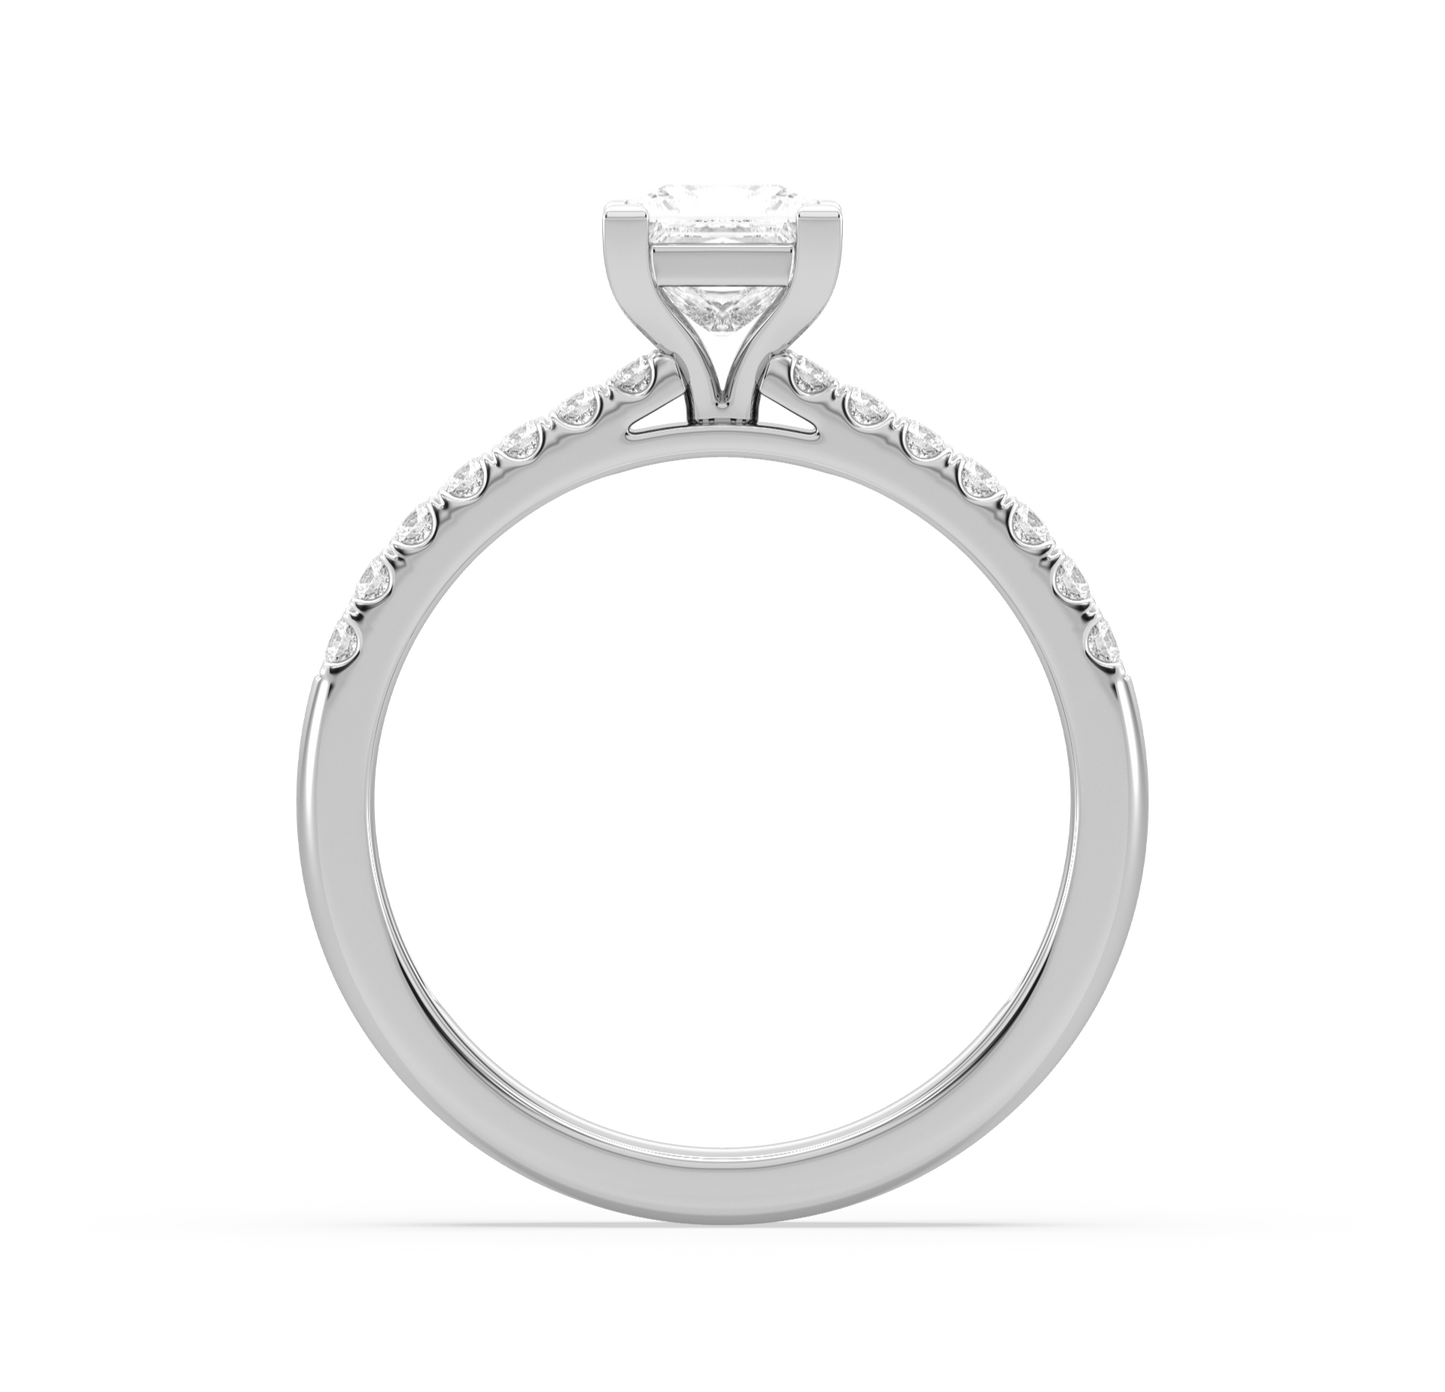 Customised ring RG21011-PH21003